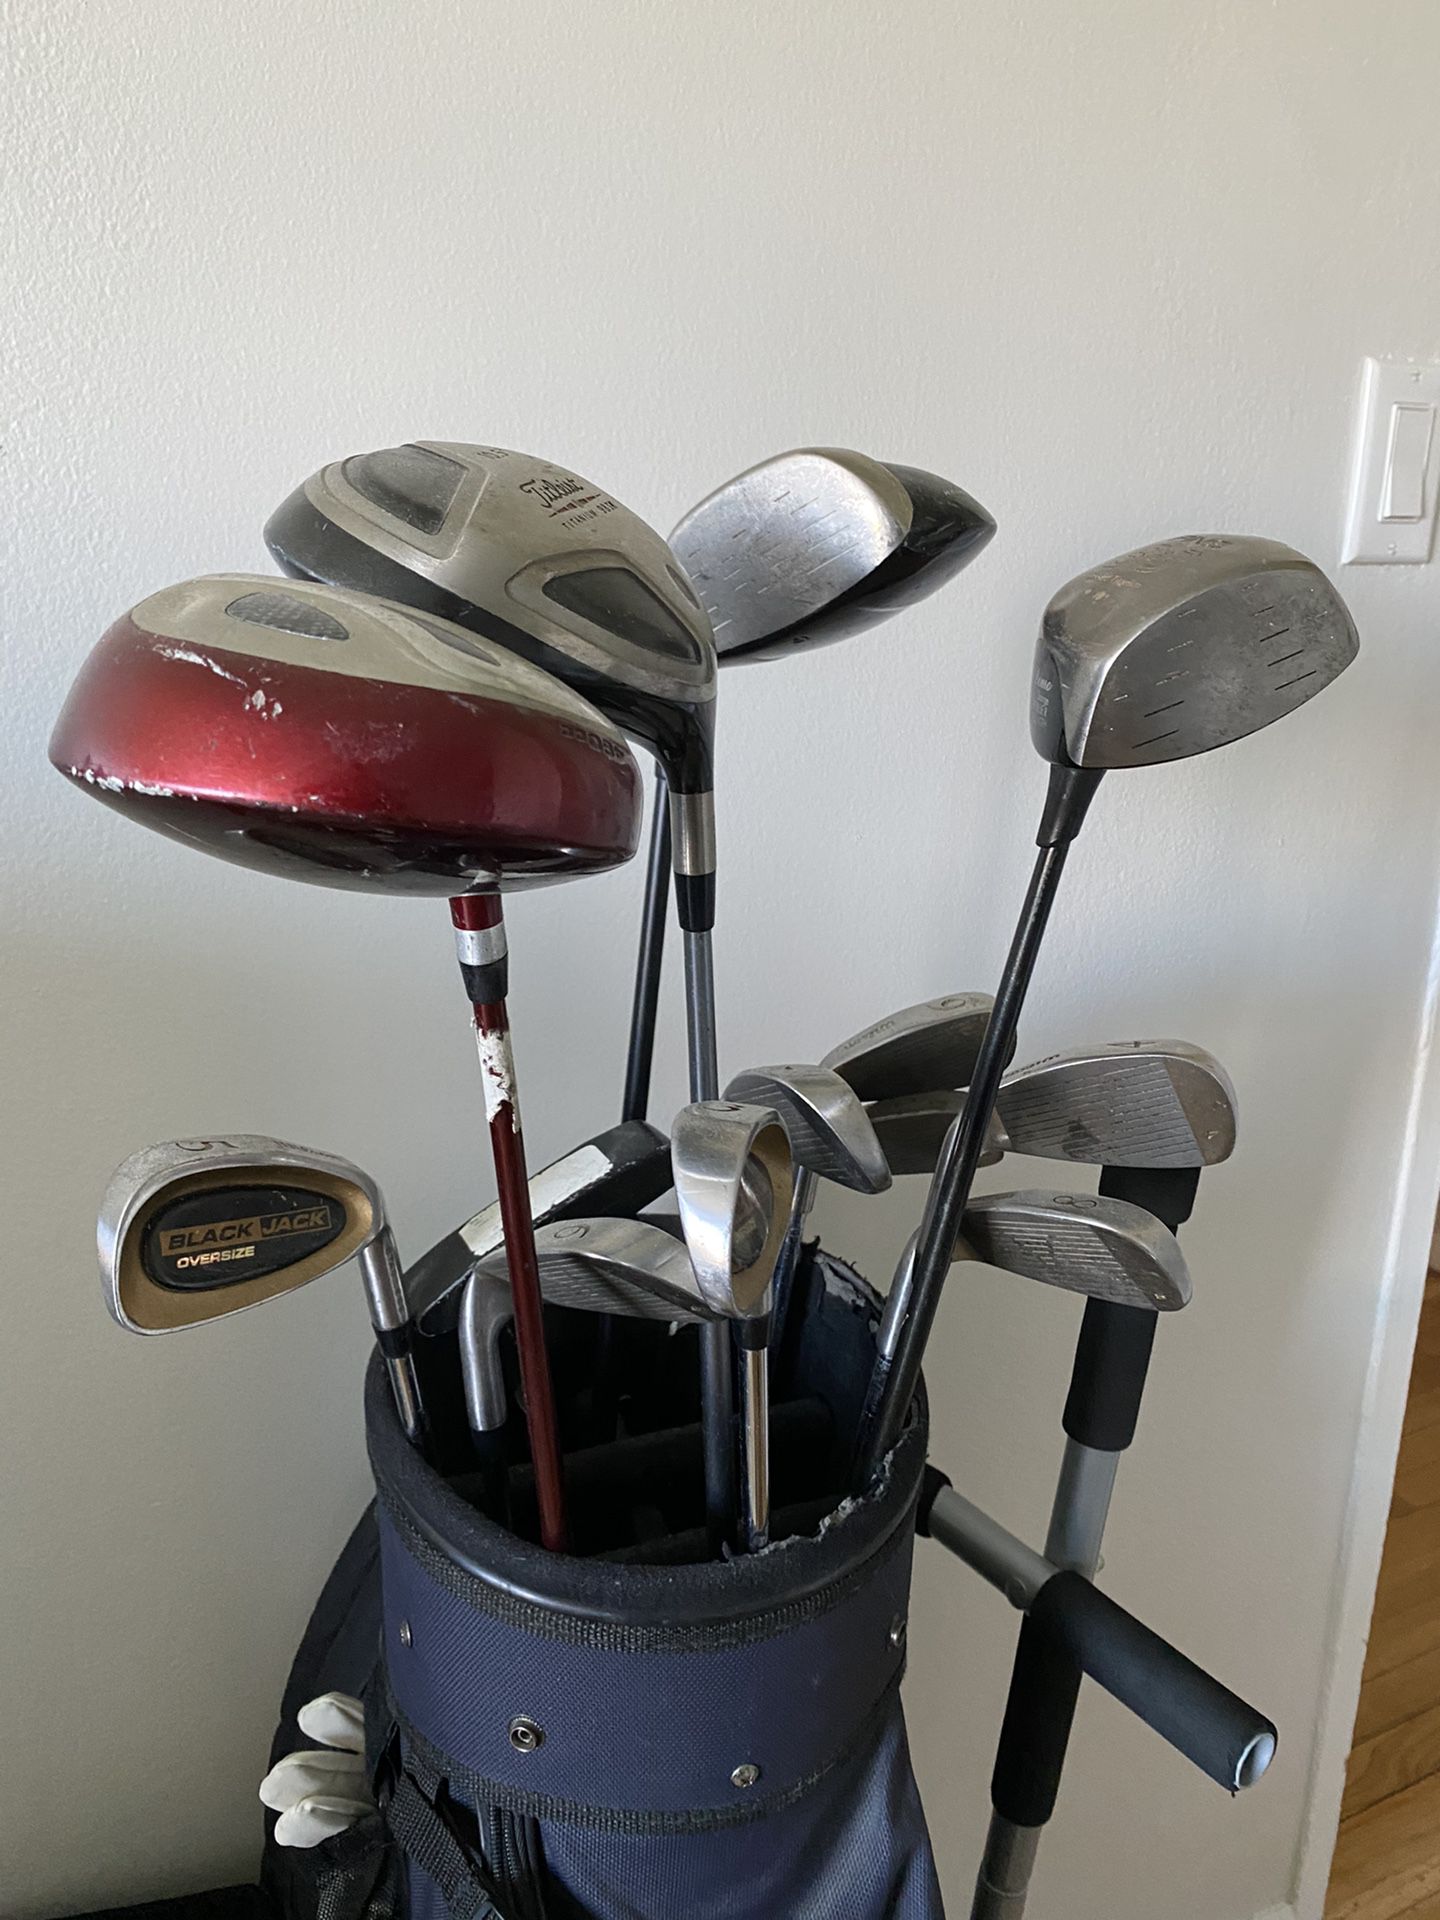 Golf Club set - 3 drivers, set of irons, putter, bag, glove, and balls